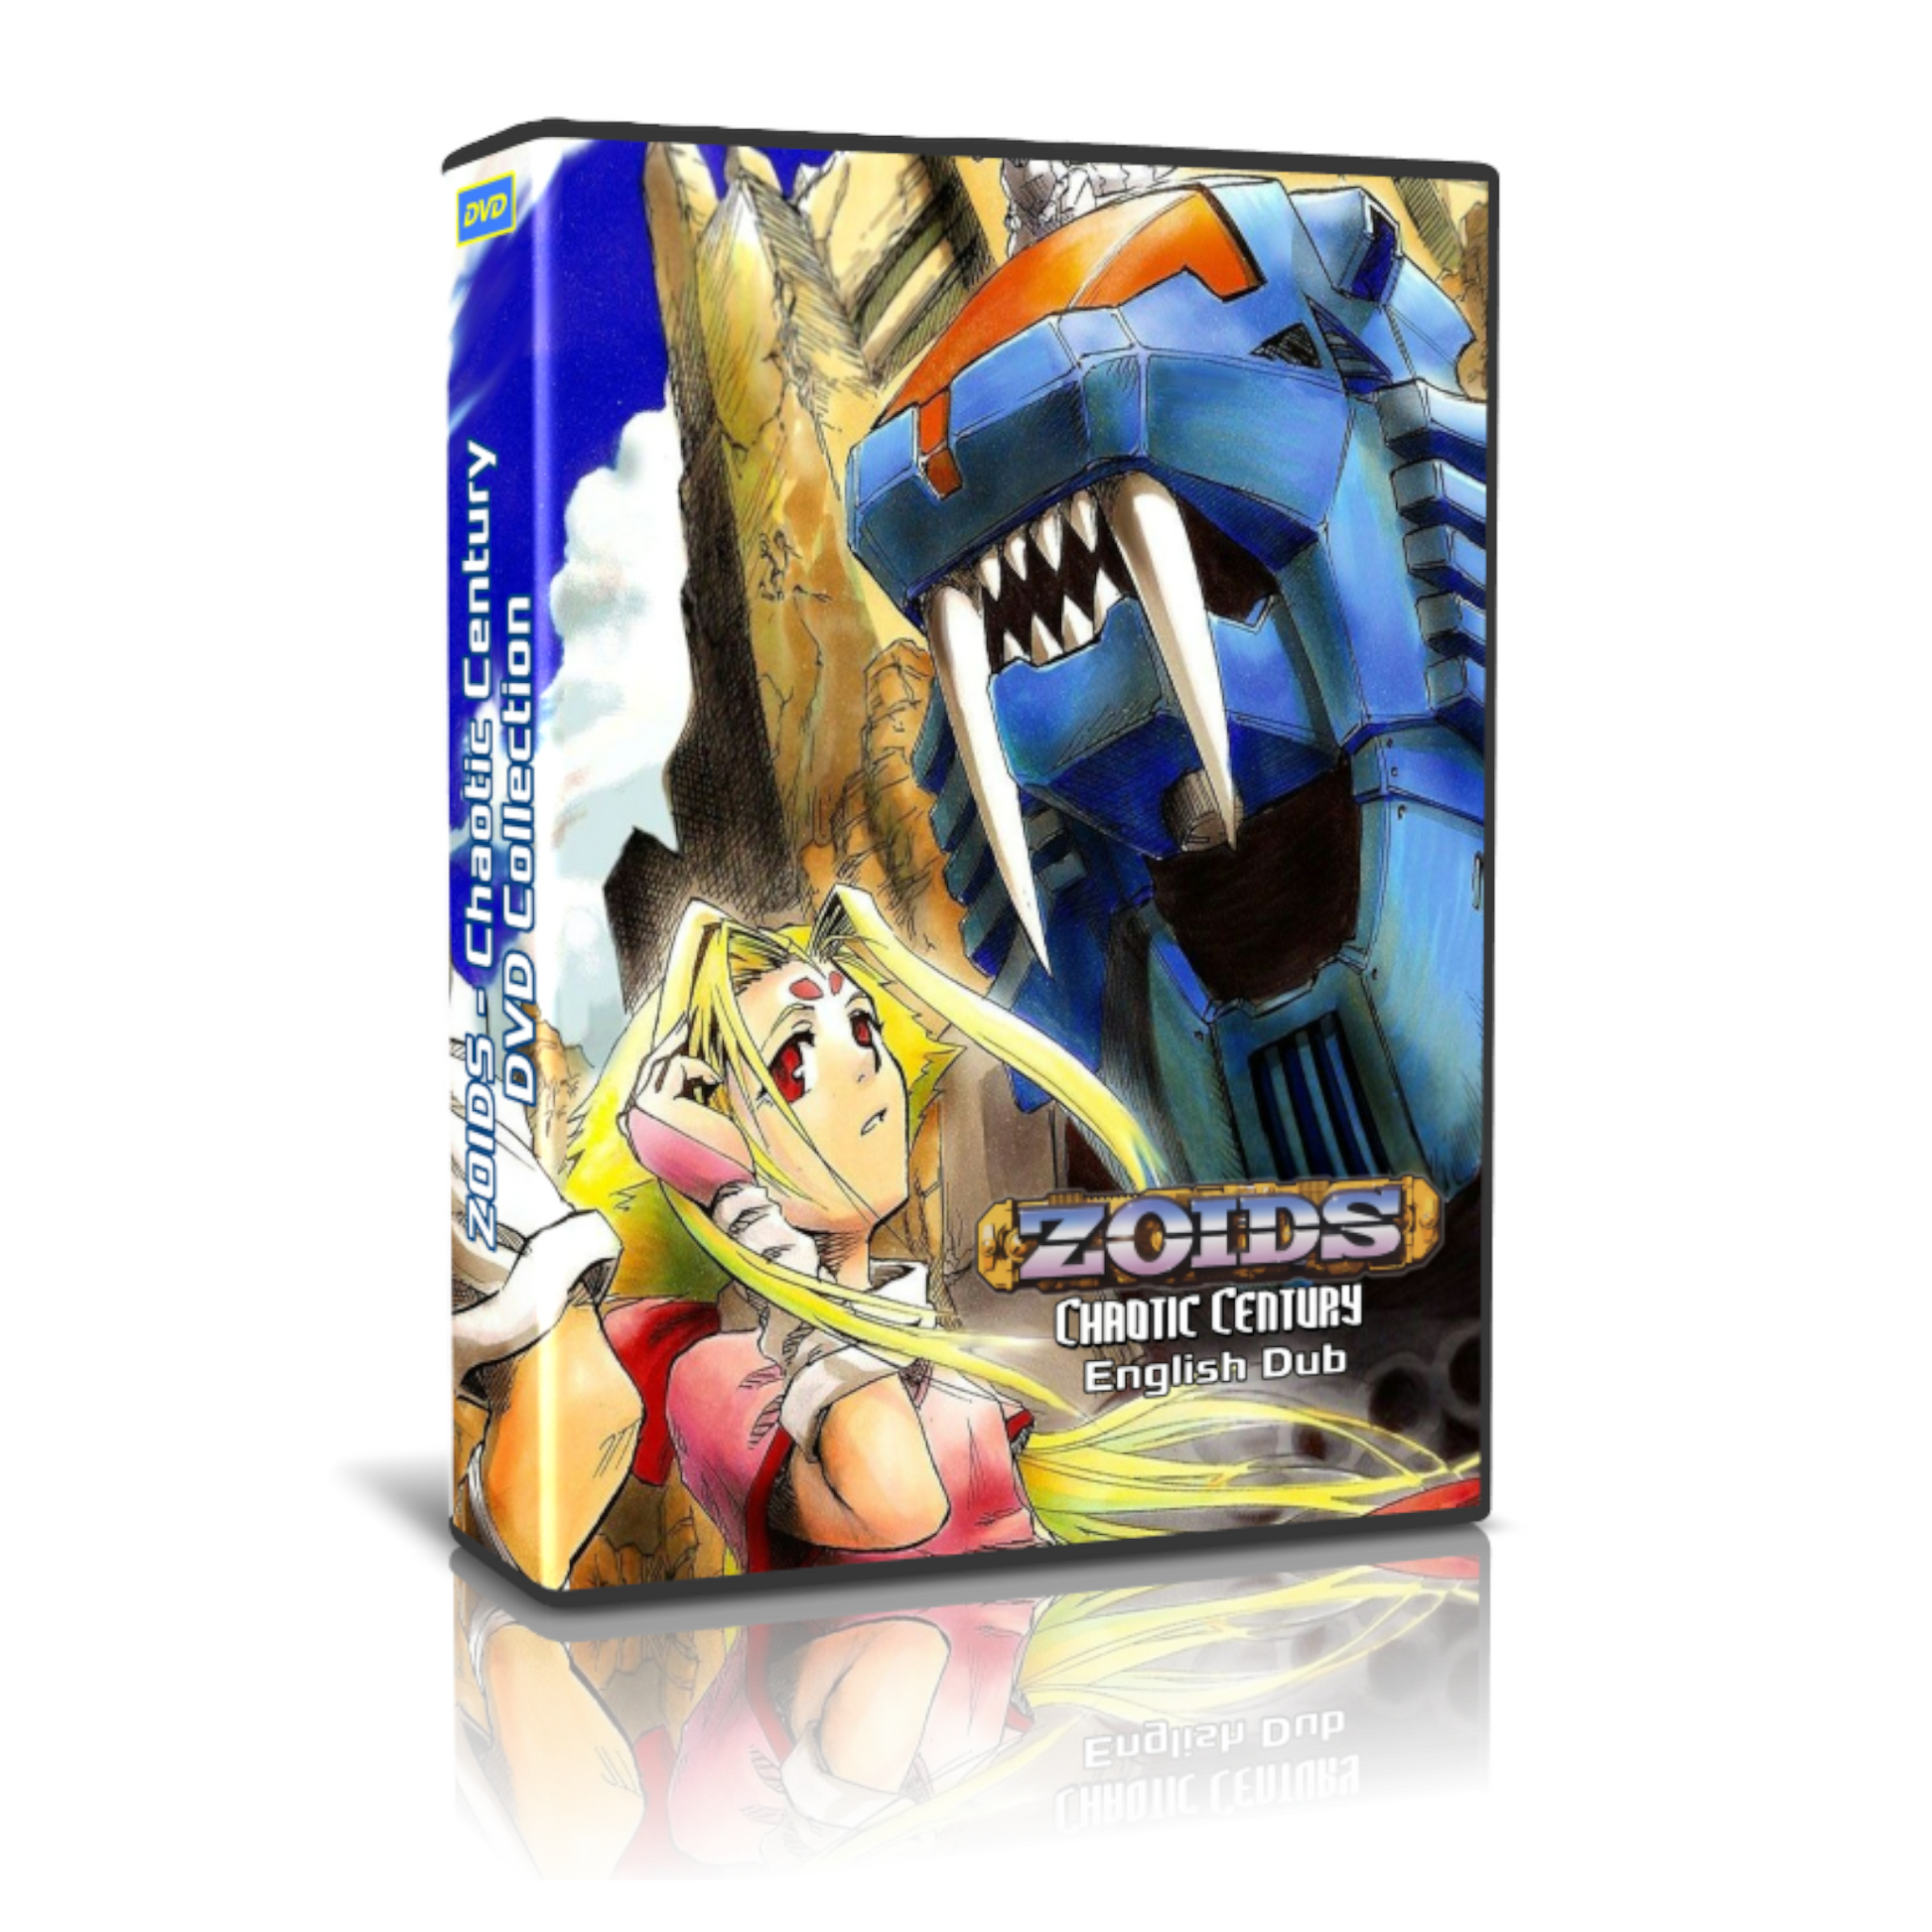 Zoids: Chaotic Century Complete Dual Audio DVD Set – RetroAnimation